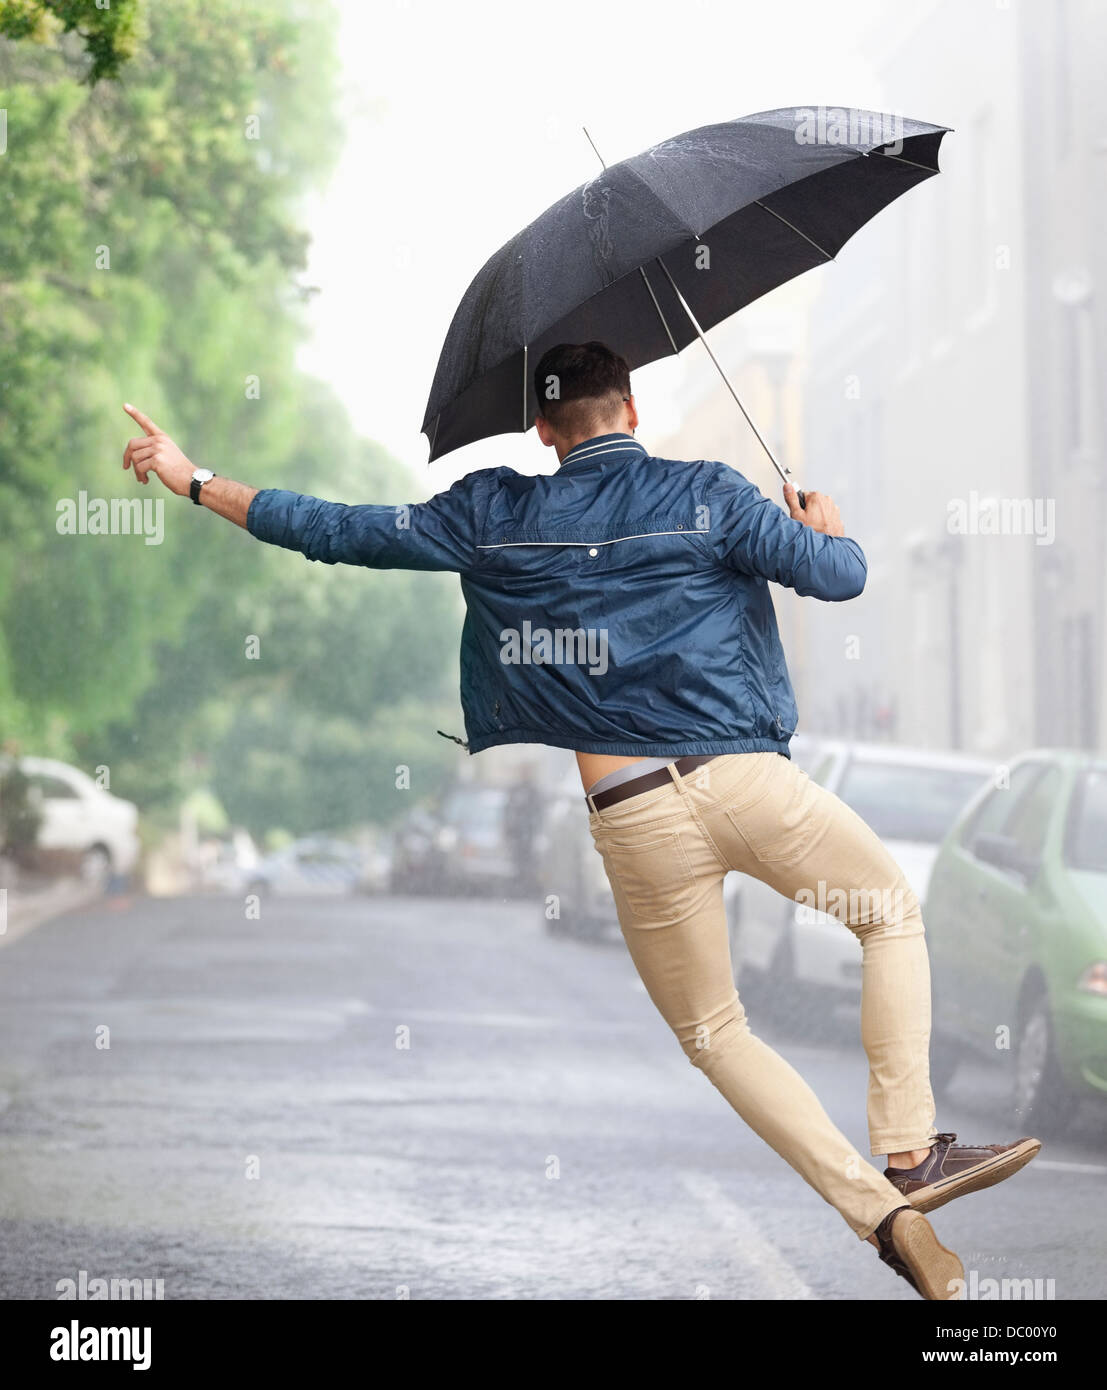 Man dancing with umbrella in rainy street Stock Photo